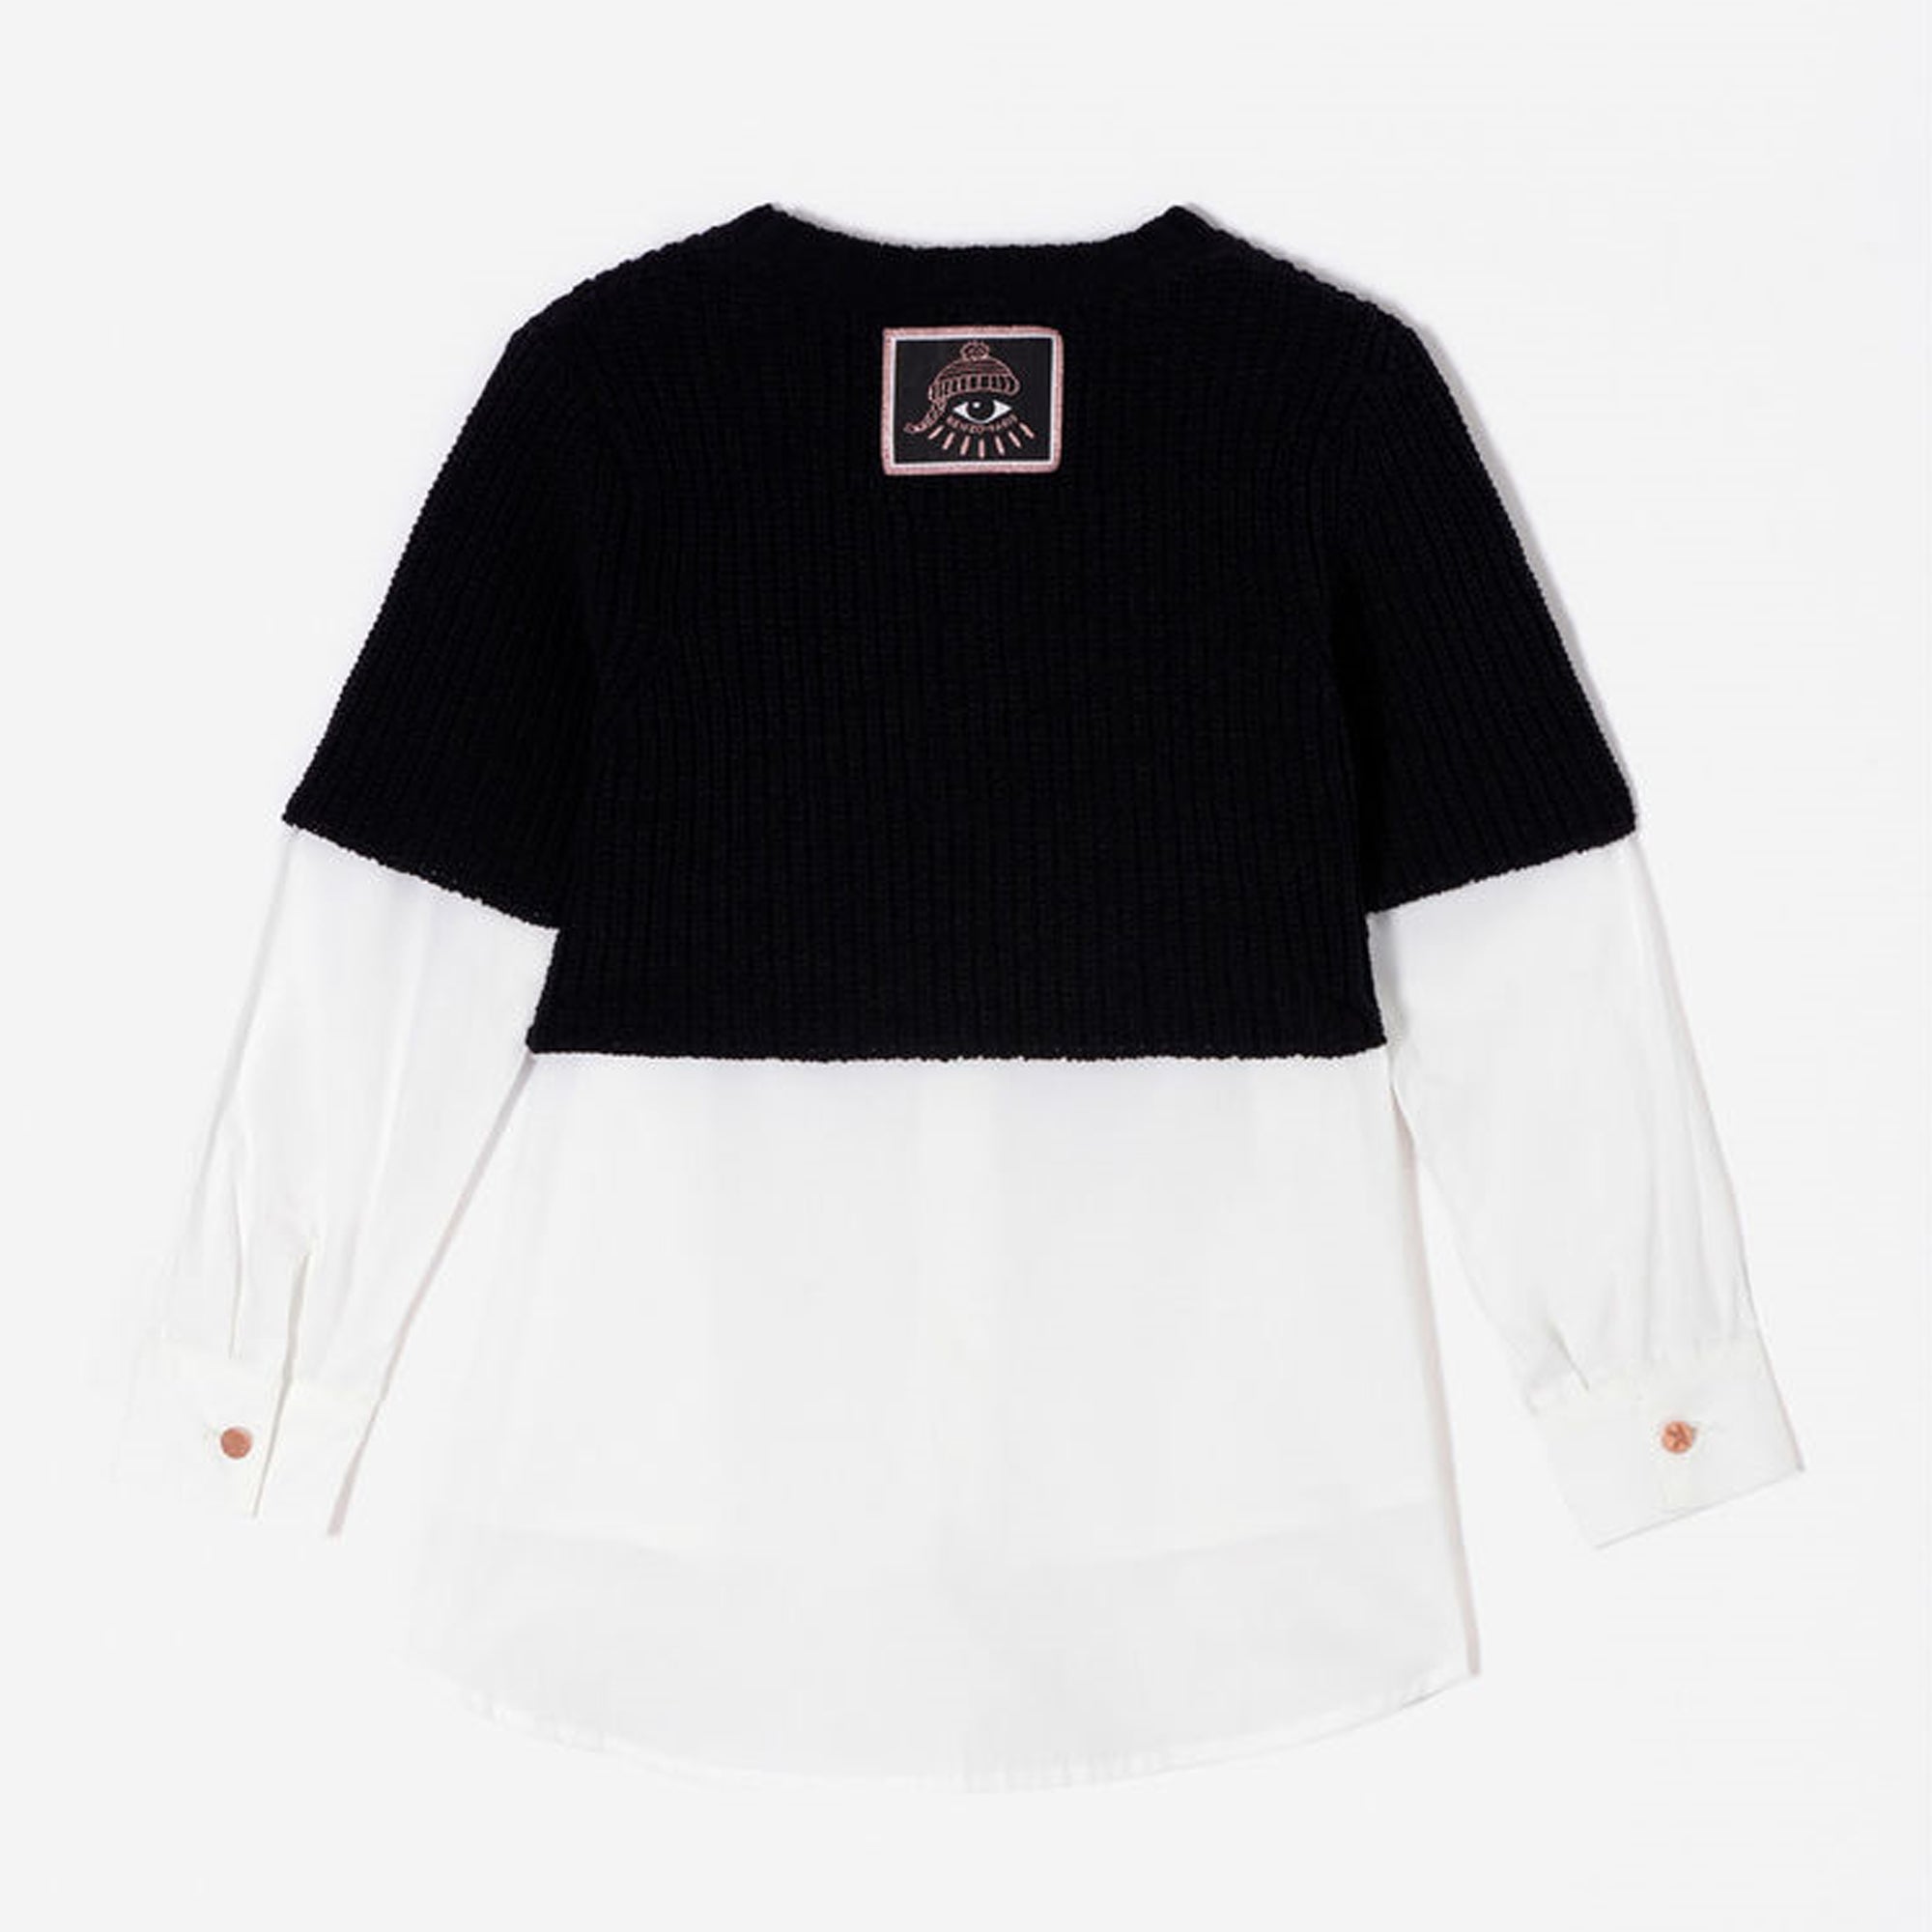 Girls Black & White Cotton Sweater